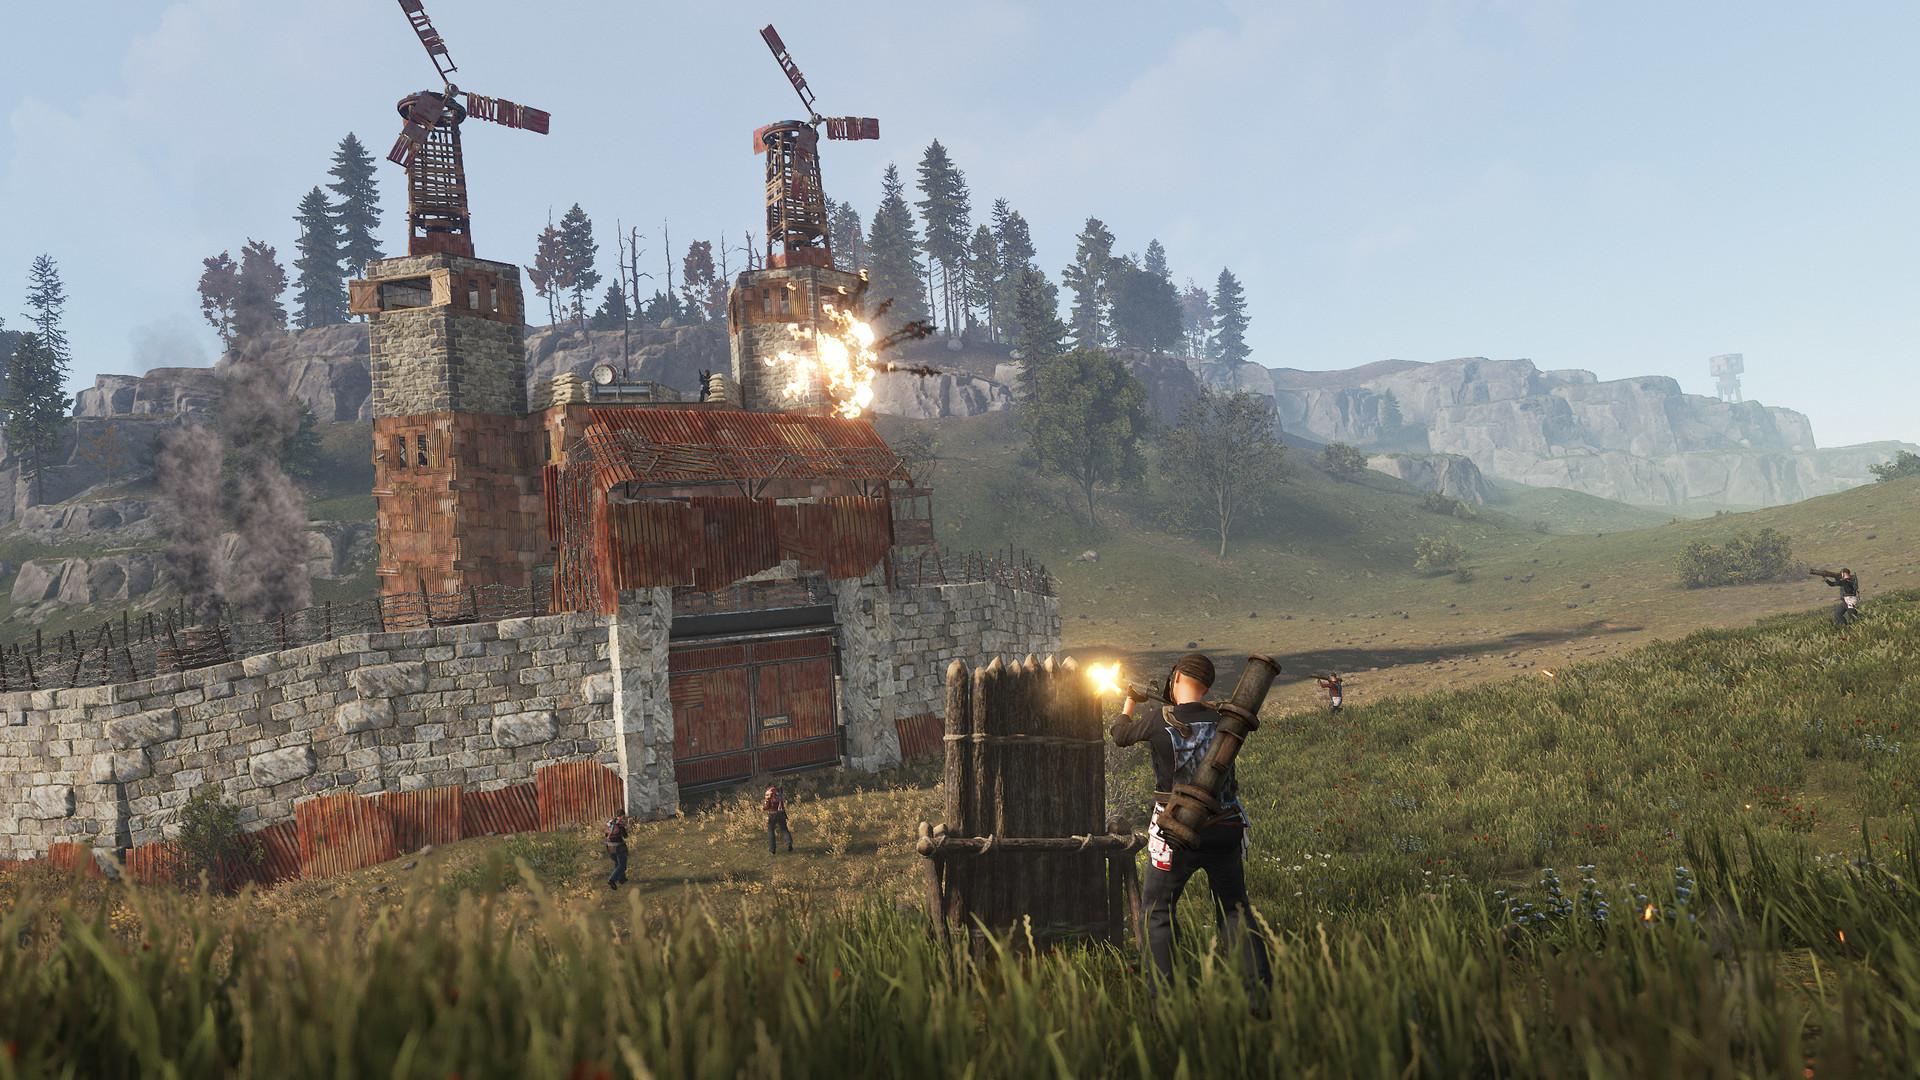 Screenshot №4 from game Rust